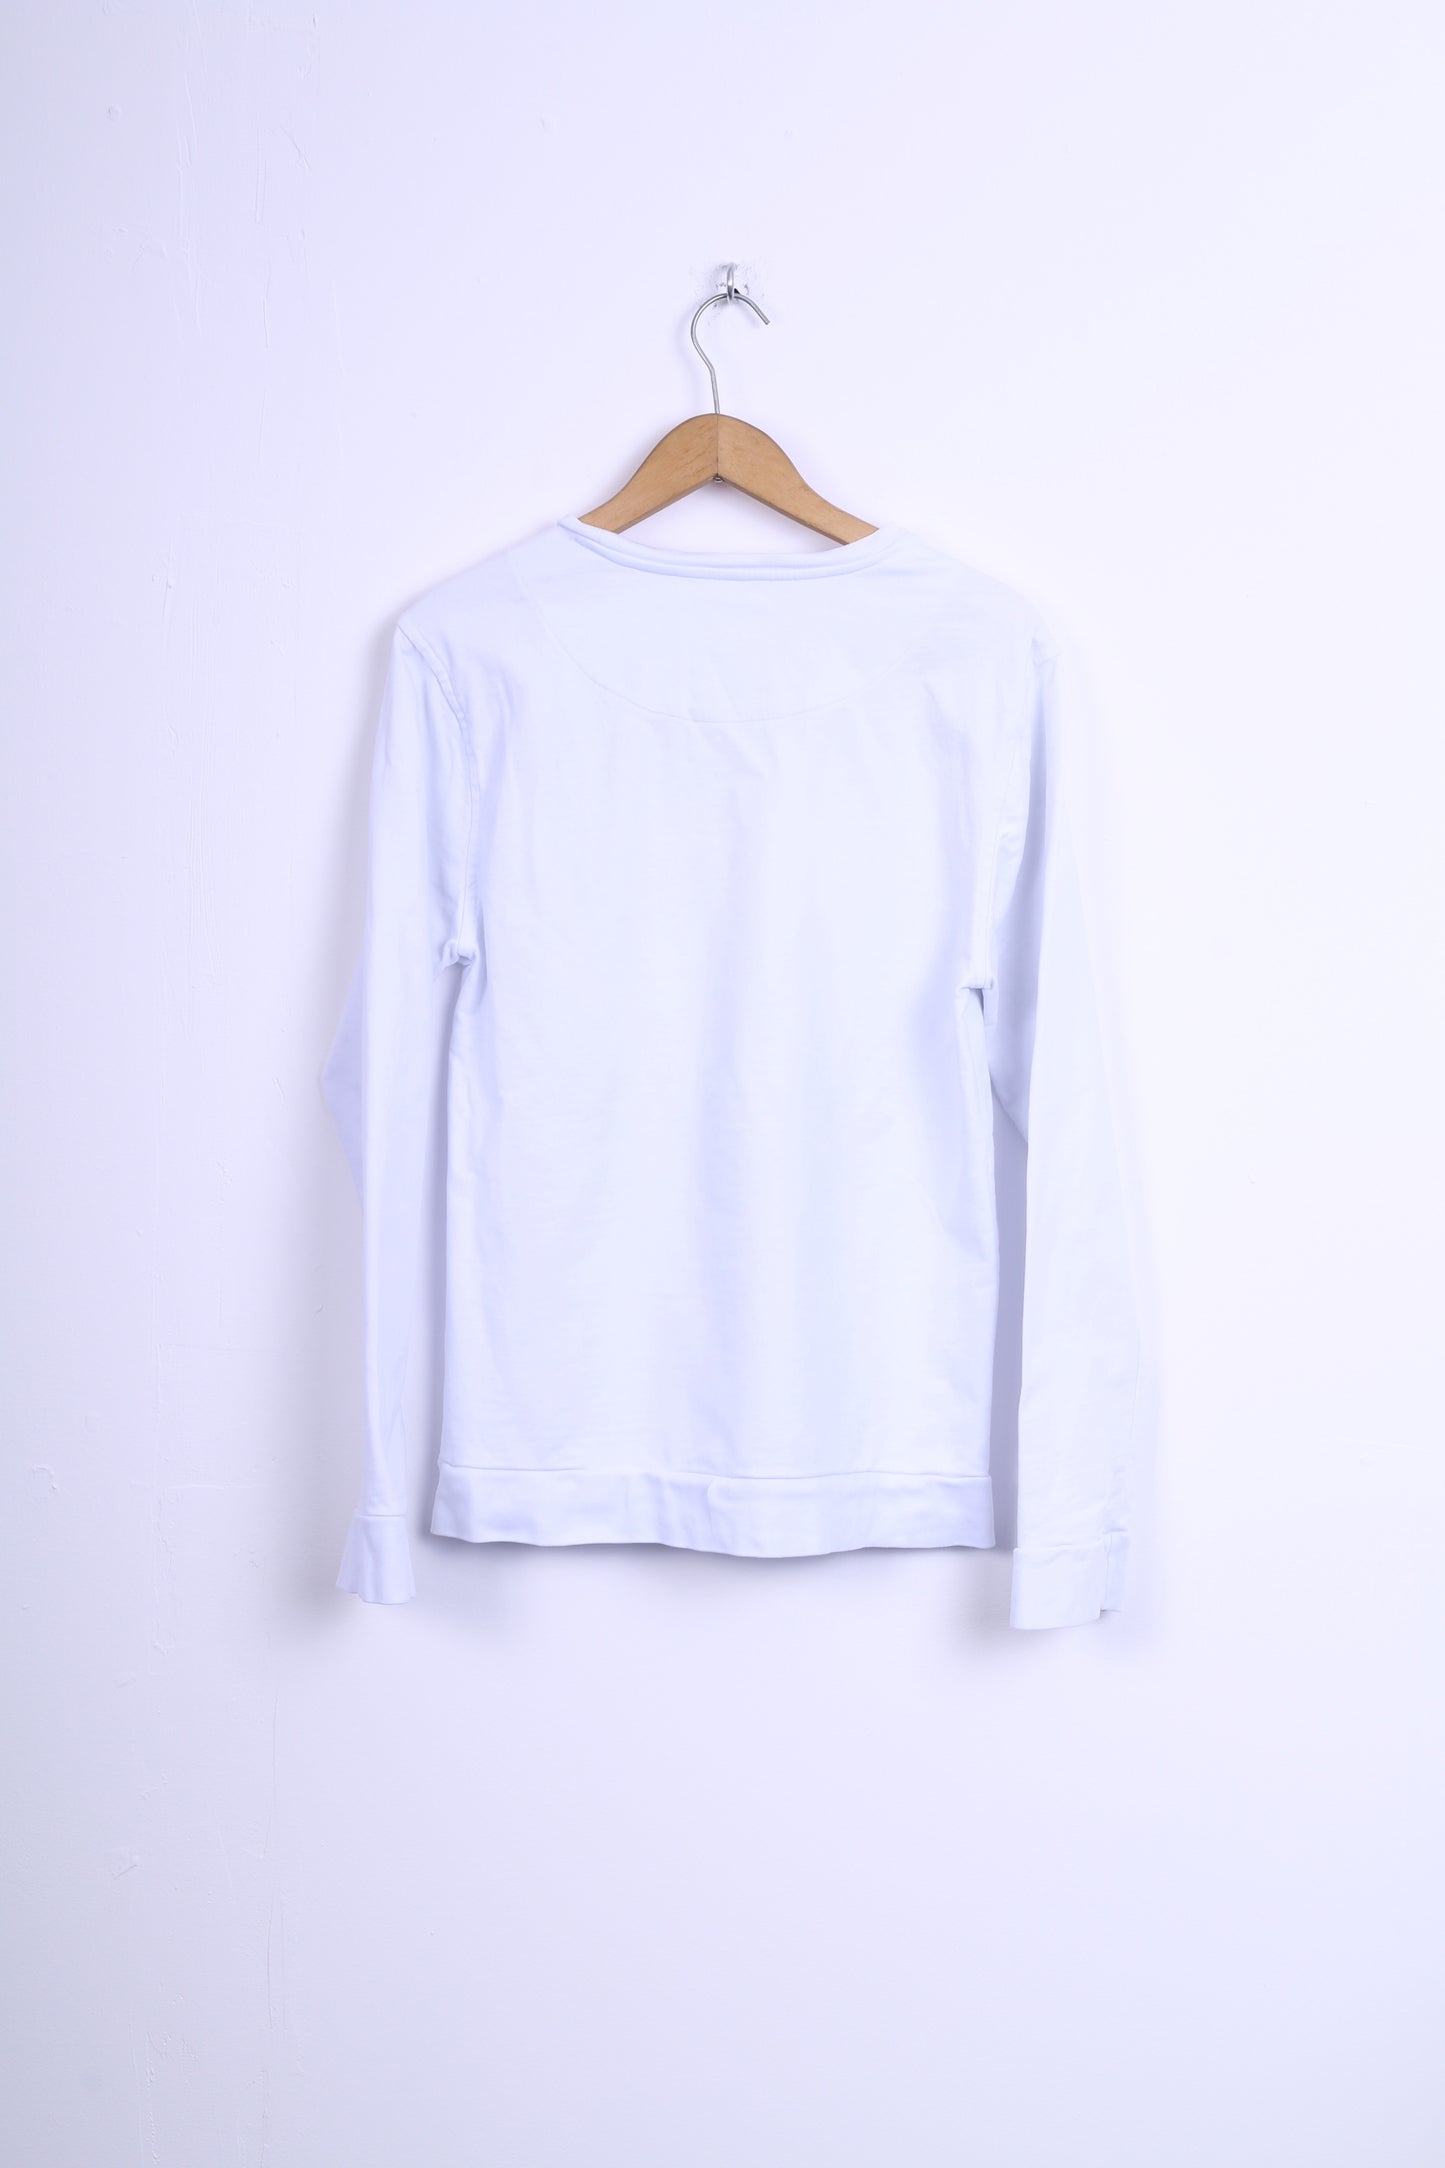 FABRIC Womens XL Sweatshirt Jumper White Fresh2 Death Cotton